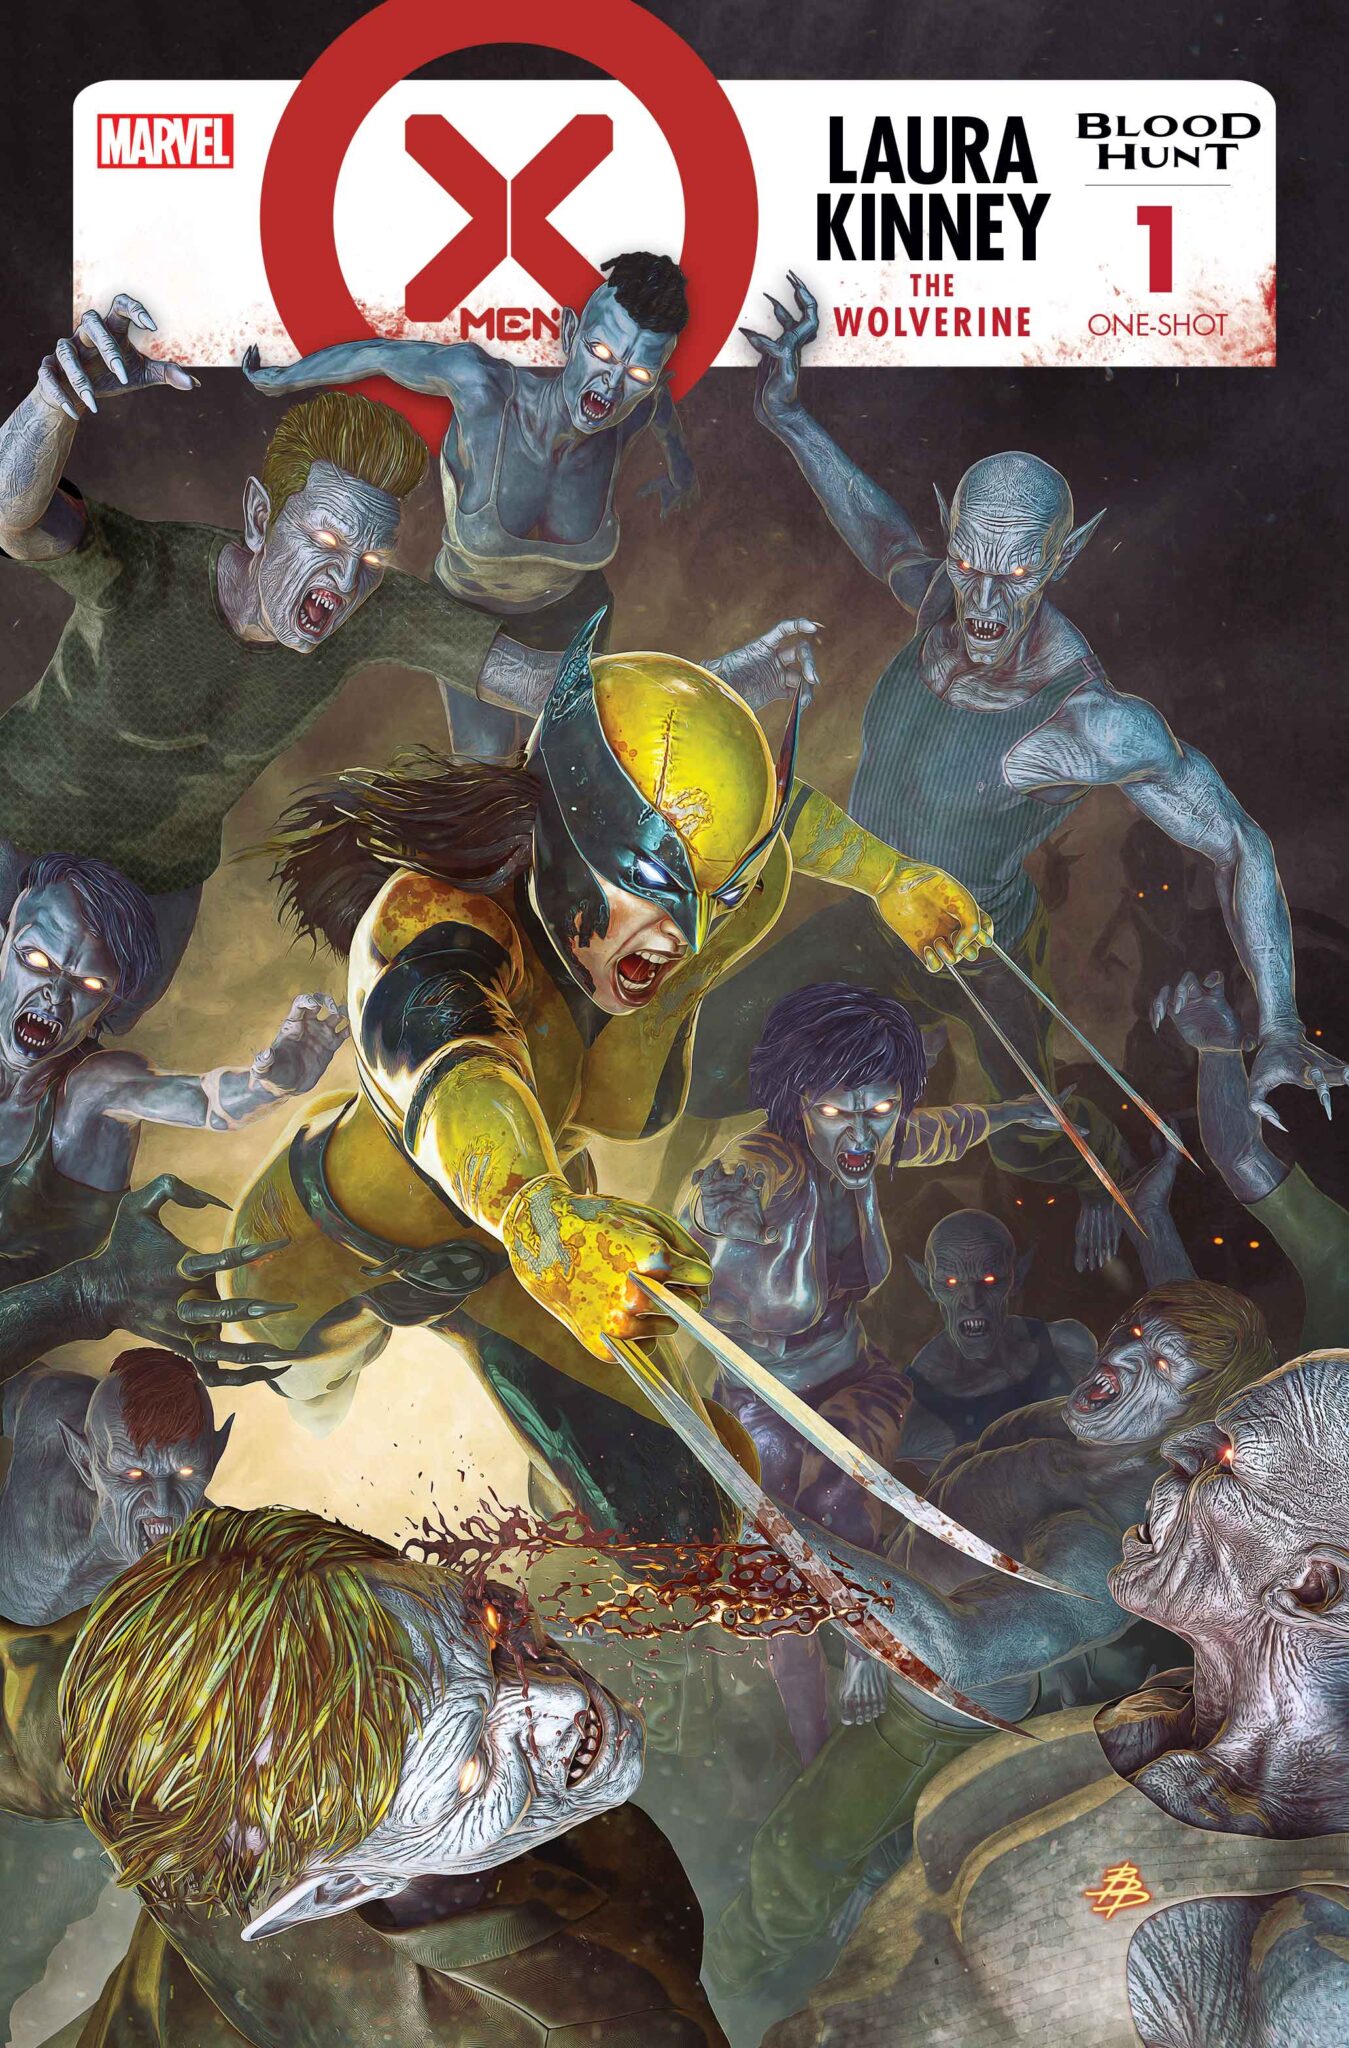 X-Men: Blood Hunt  Laura Kinney Wolverine cover